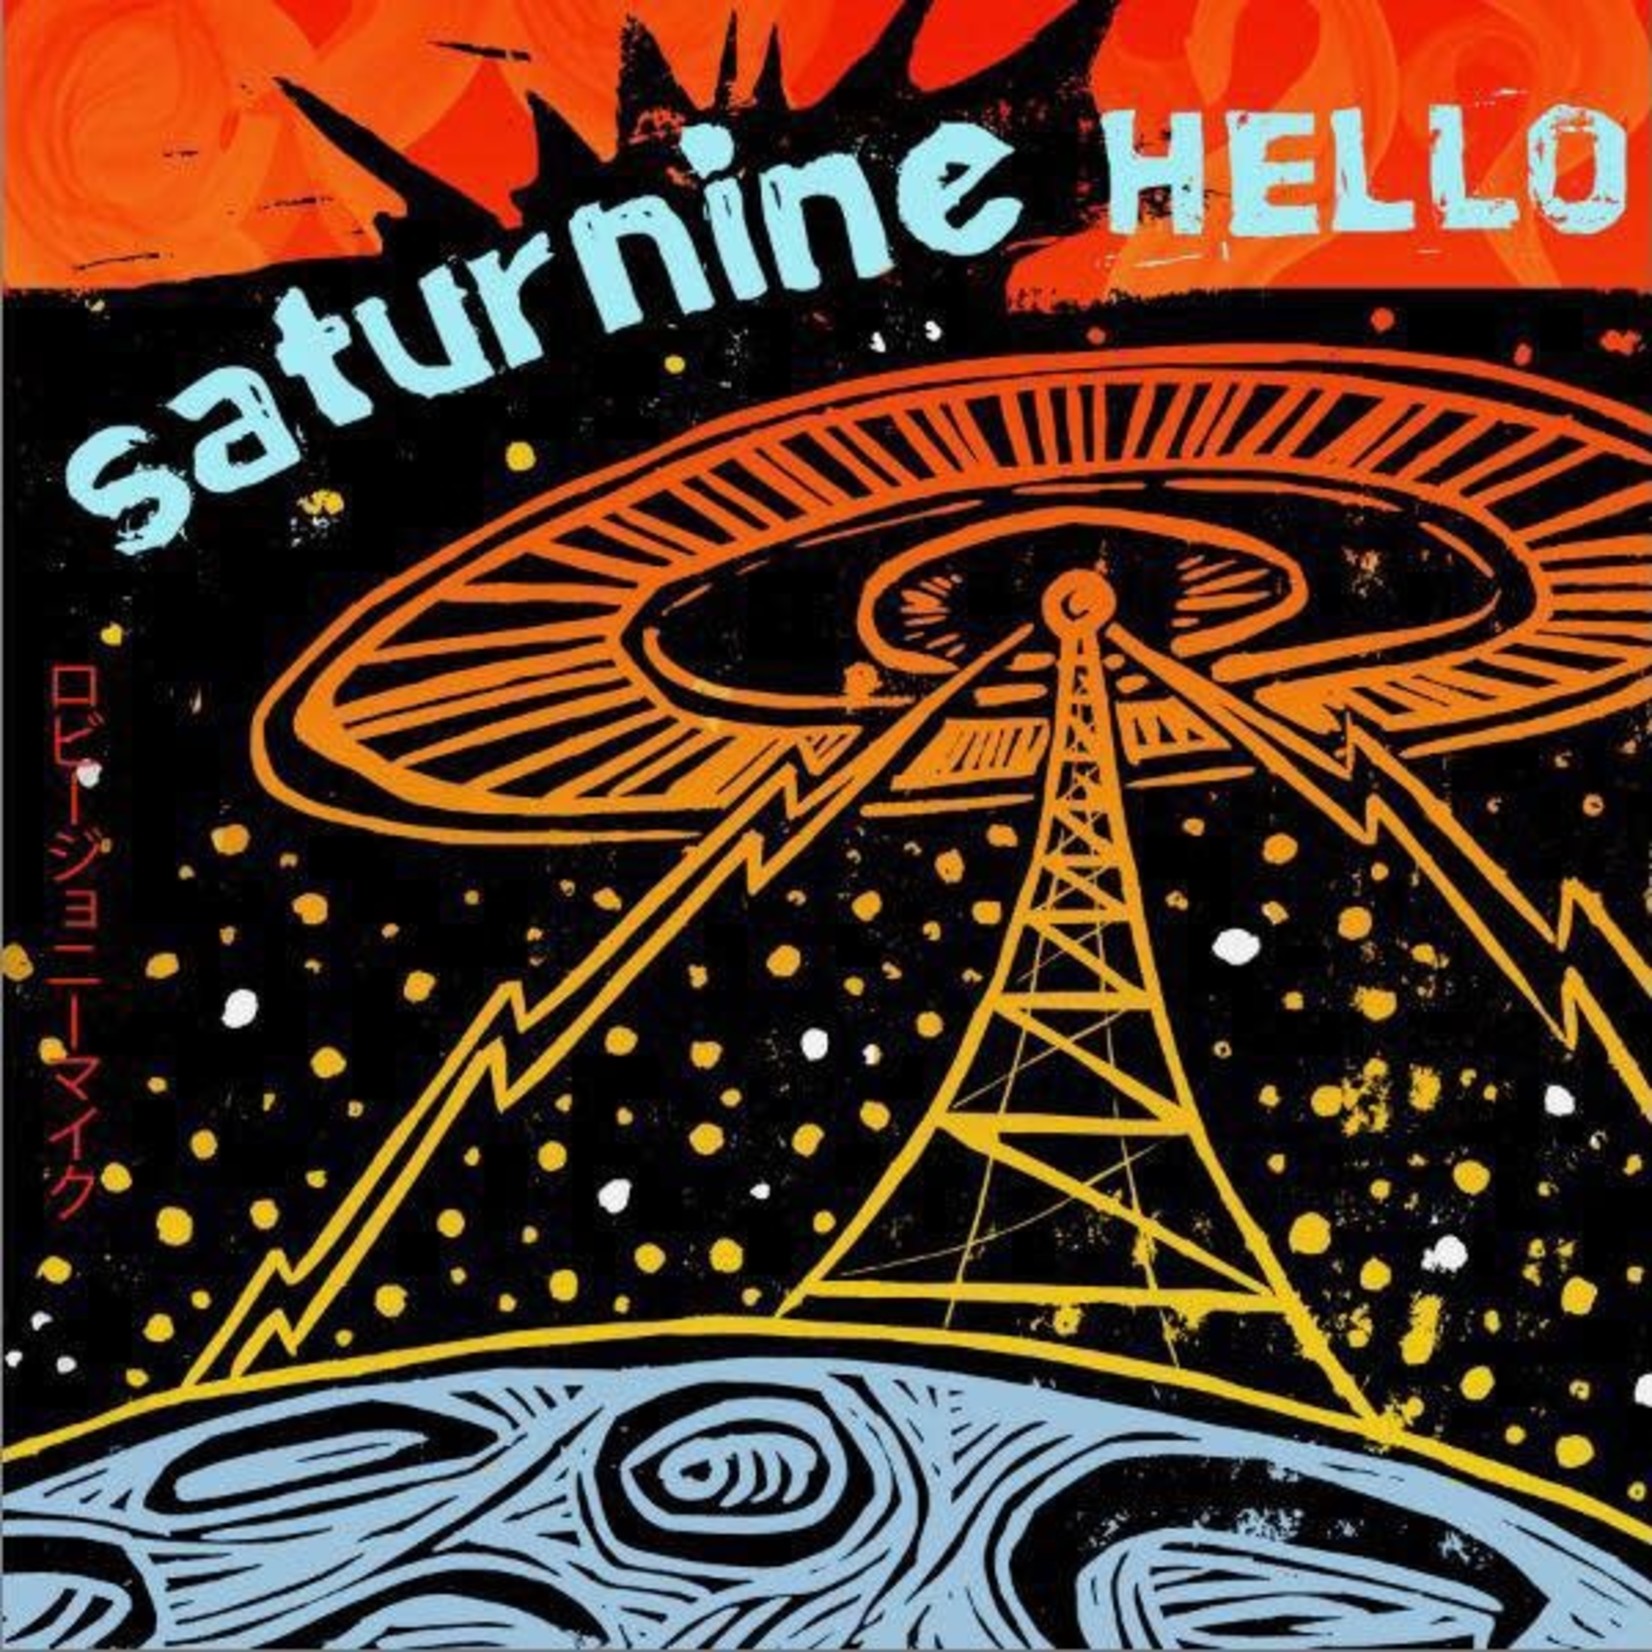 Saturnine Hello - Saturnine Hello (LP) [Splatter]